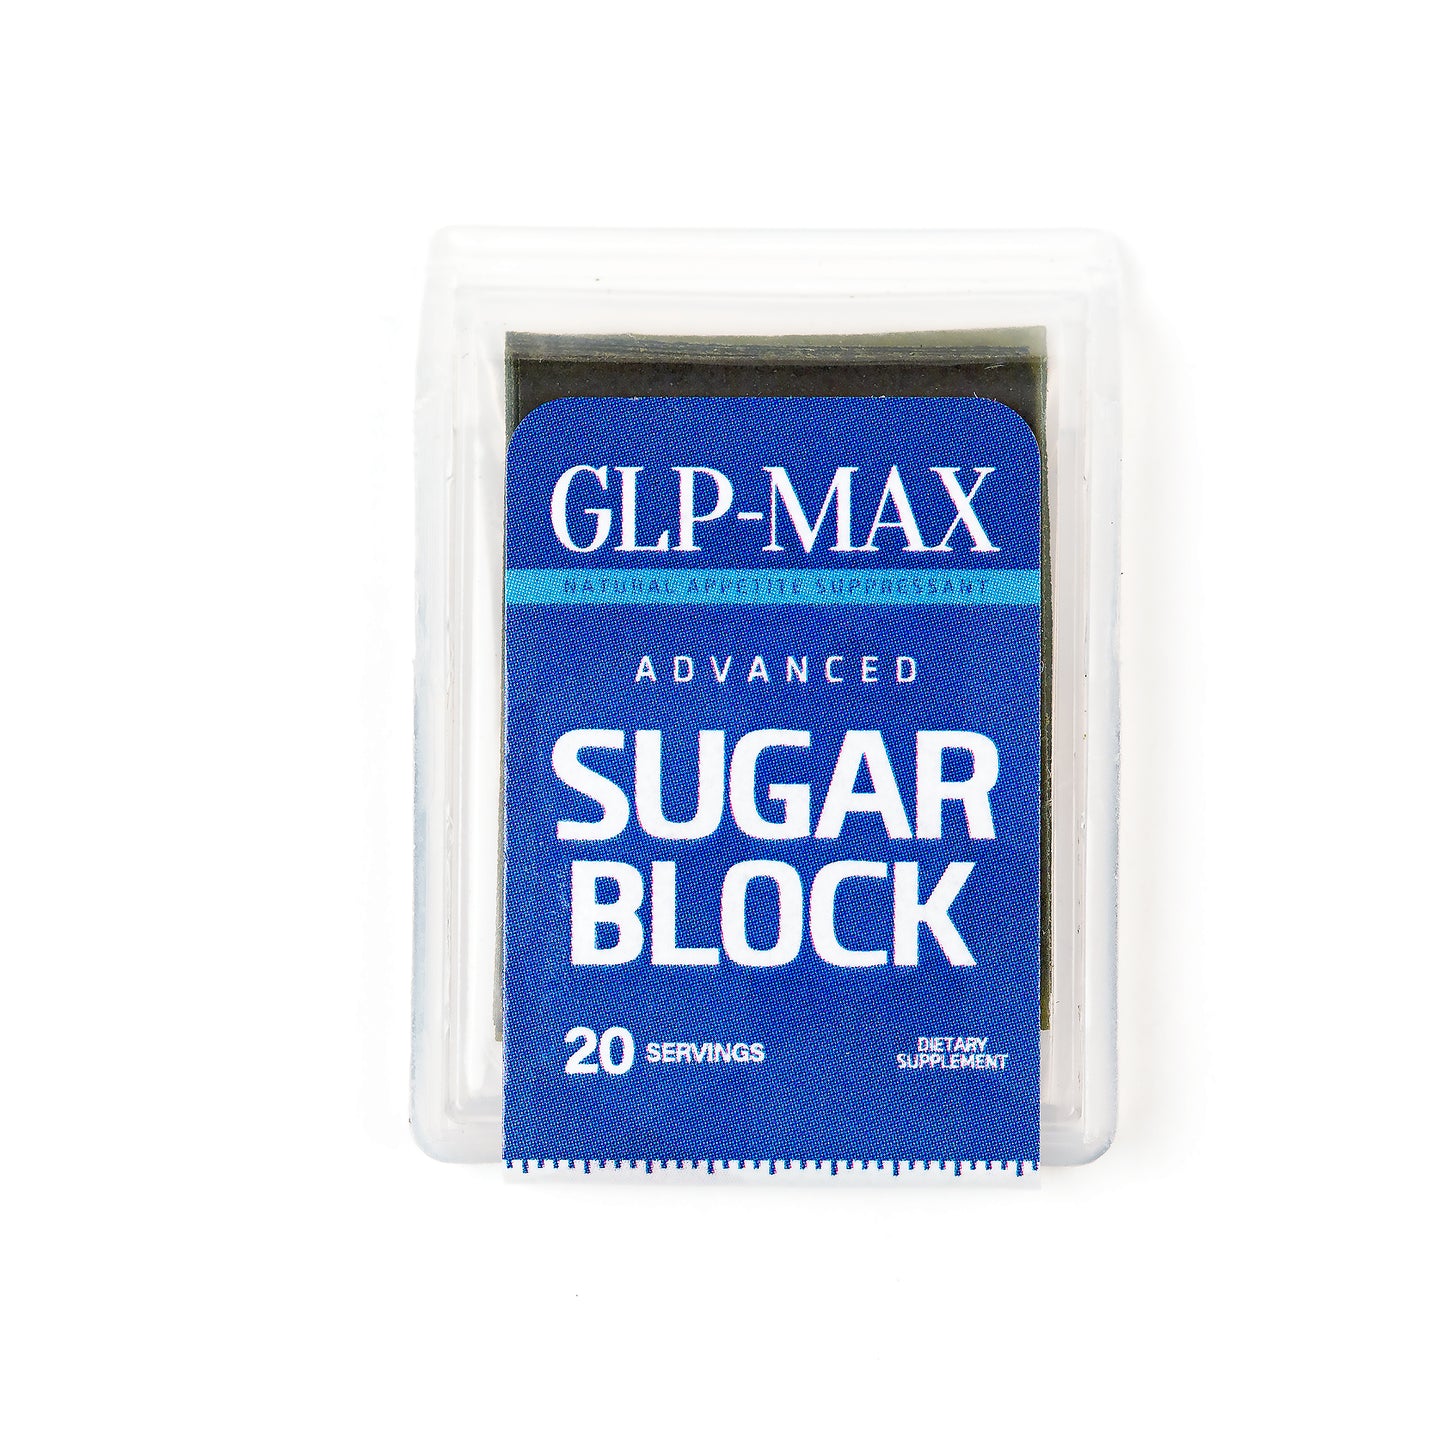 Advanced Sugar Block